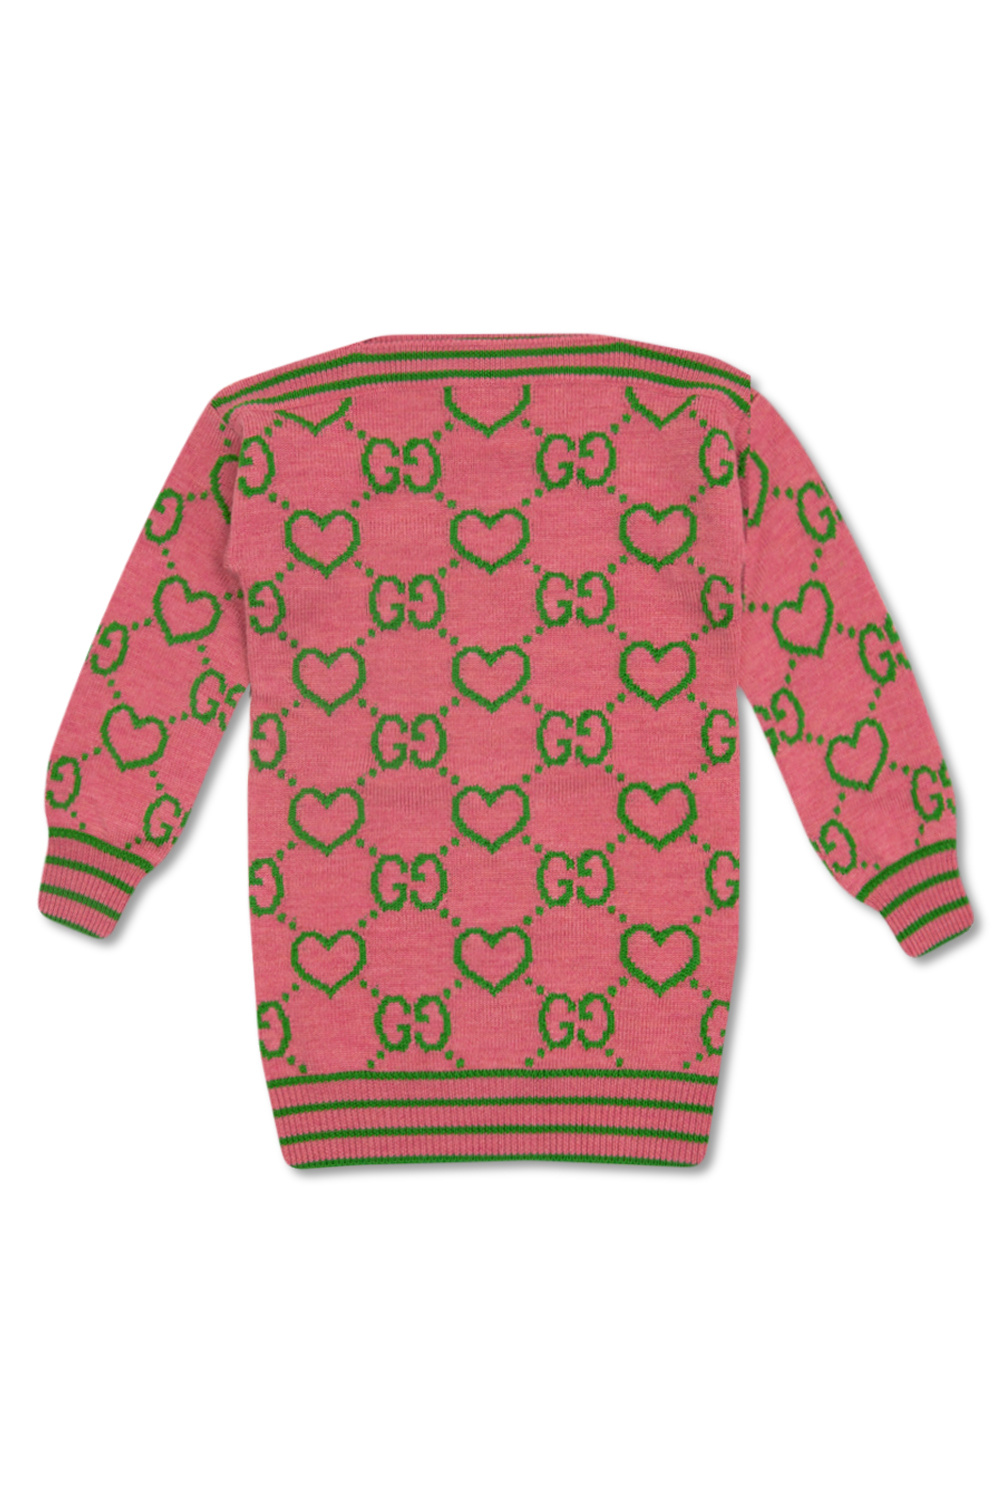 gucci small Kids Sweater with GG pattern